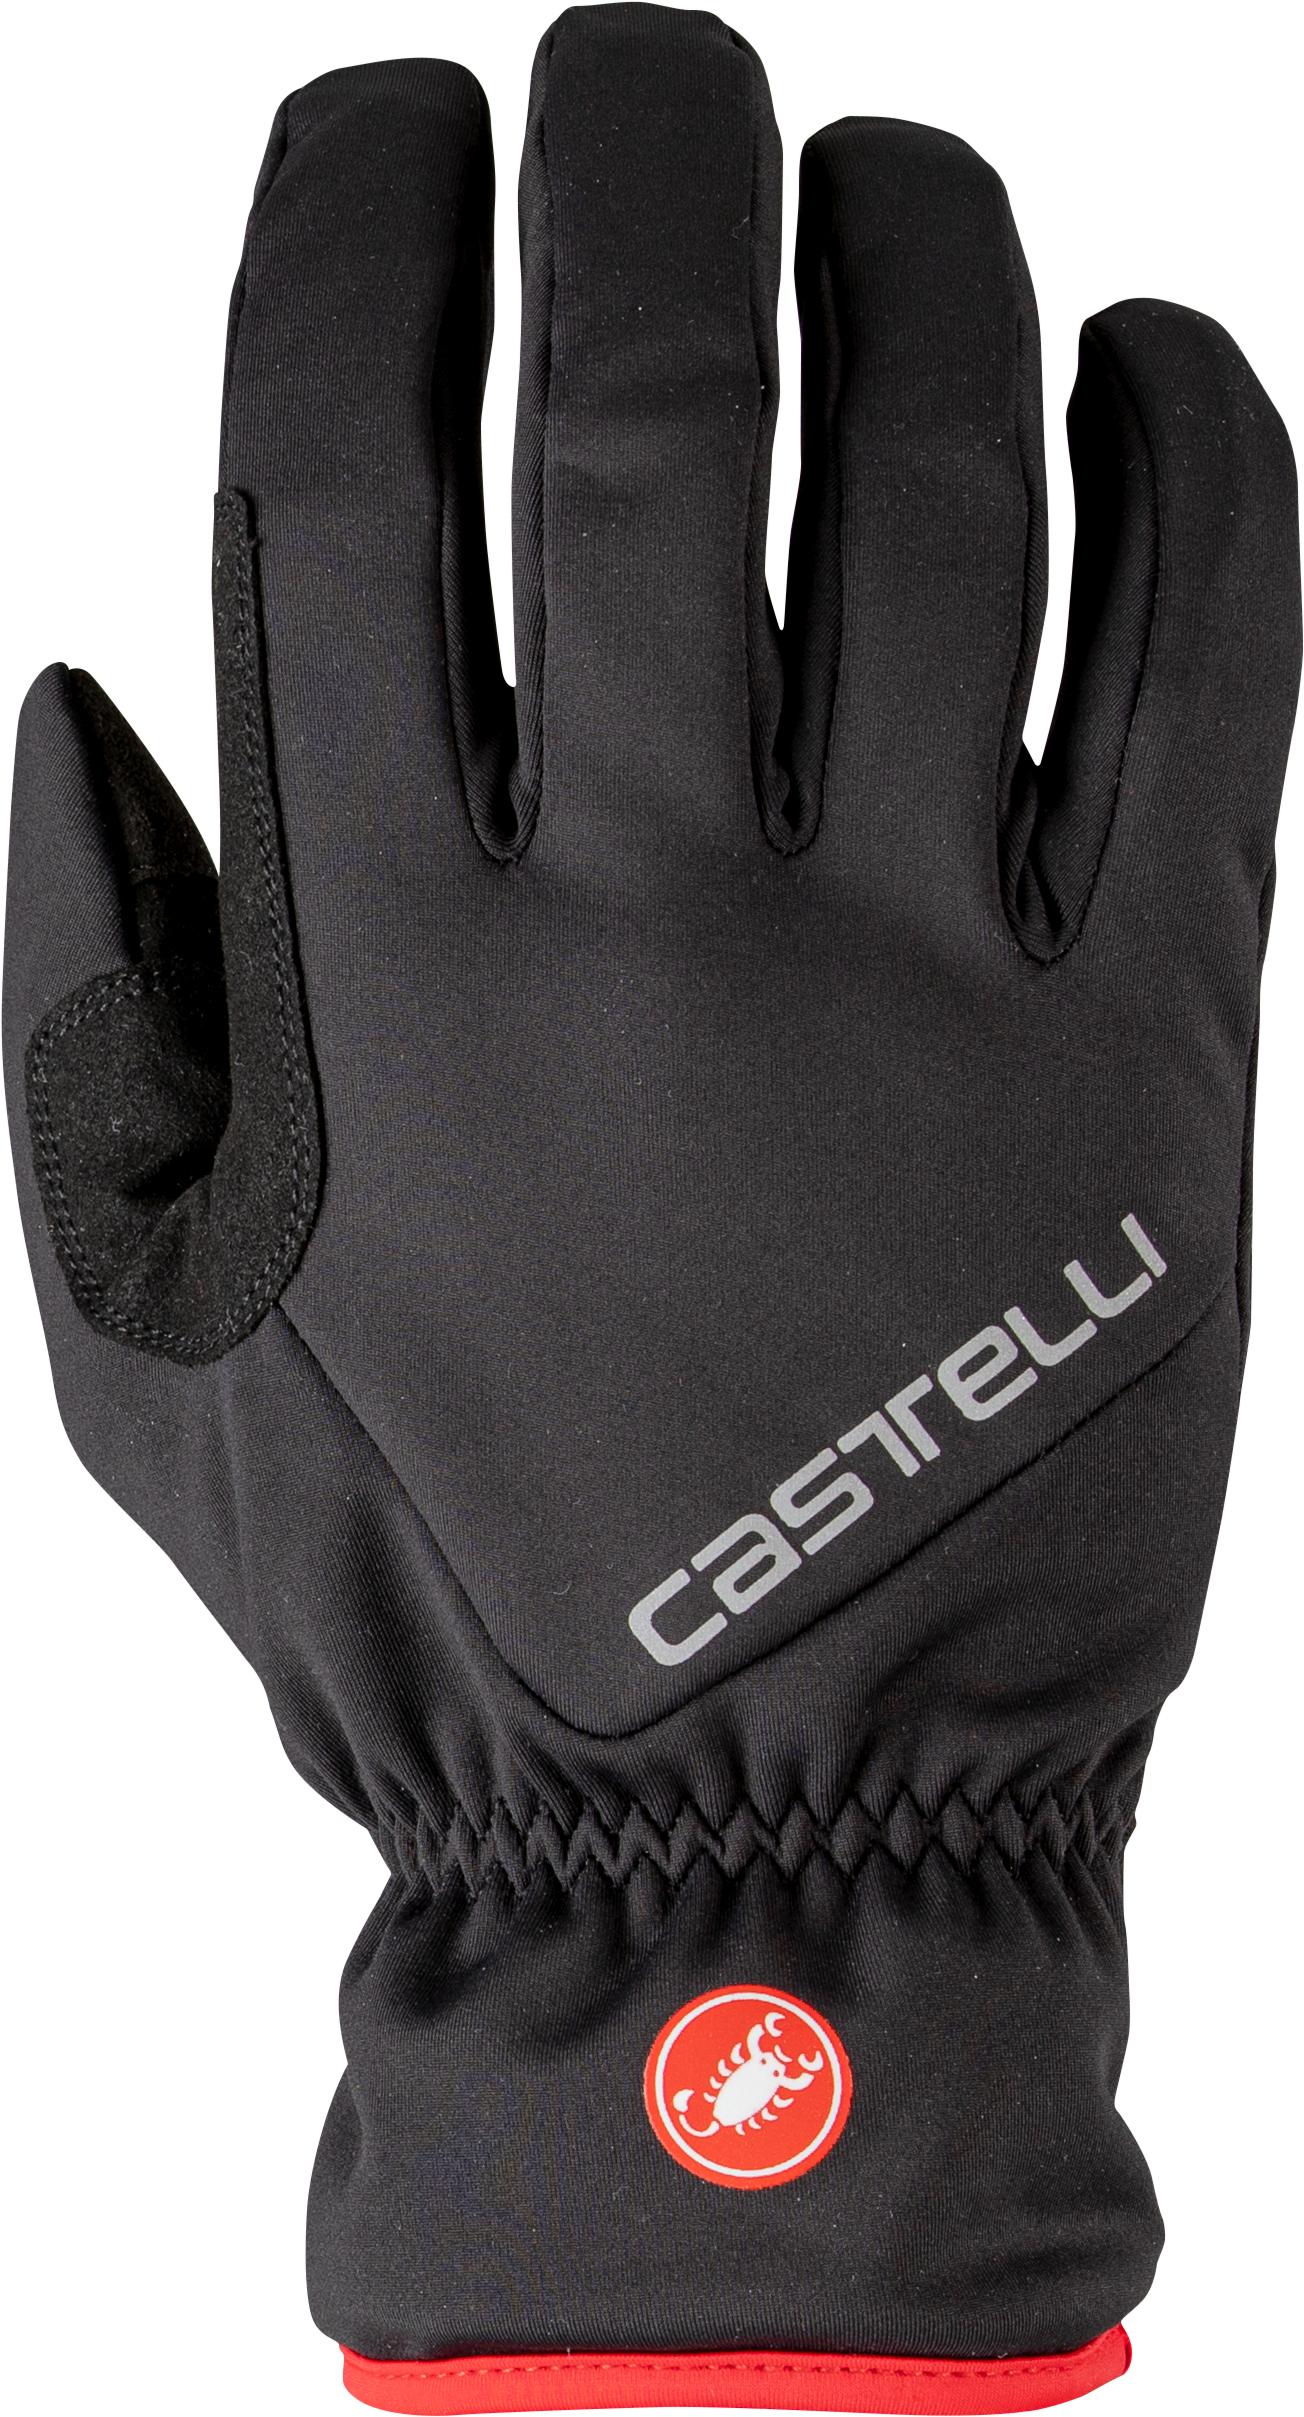 Castelli Entrata Thermal Cycling Glove - Black